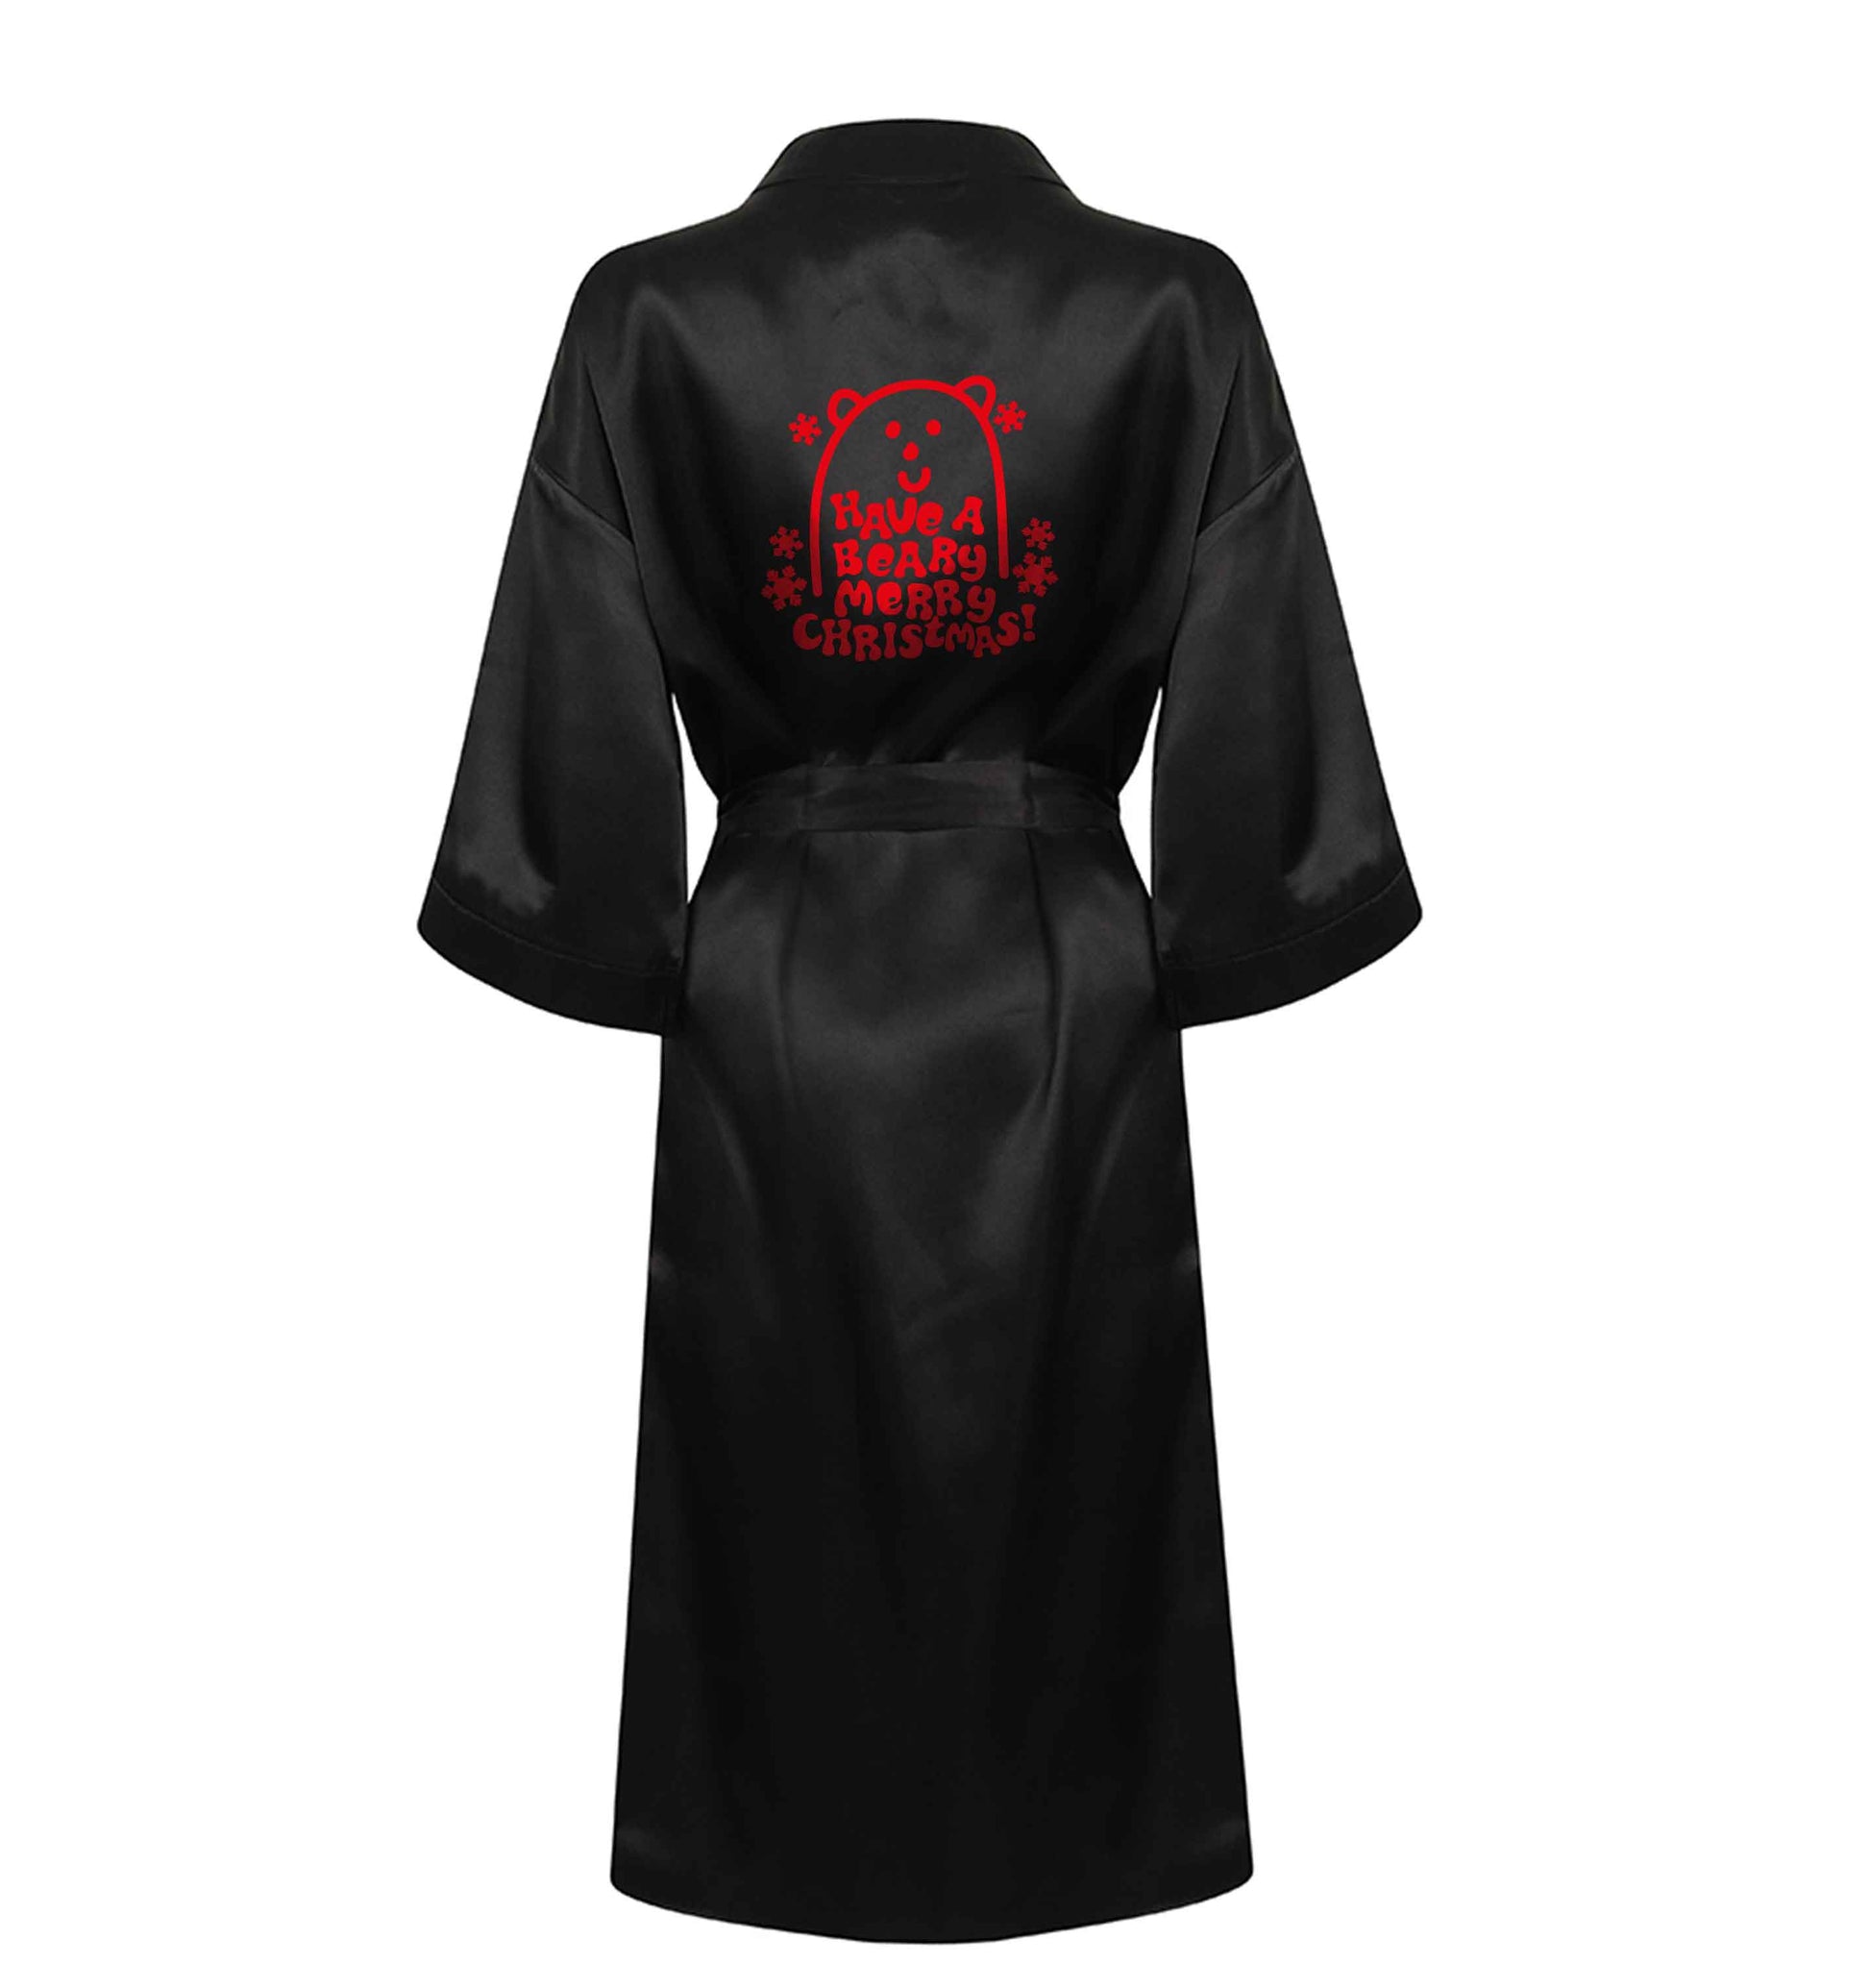 Save The Polar Bears XL/XXL black ladies dressing gown size 16/18